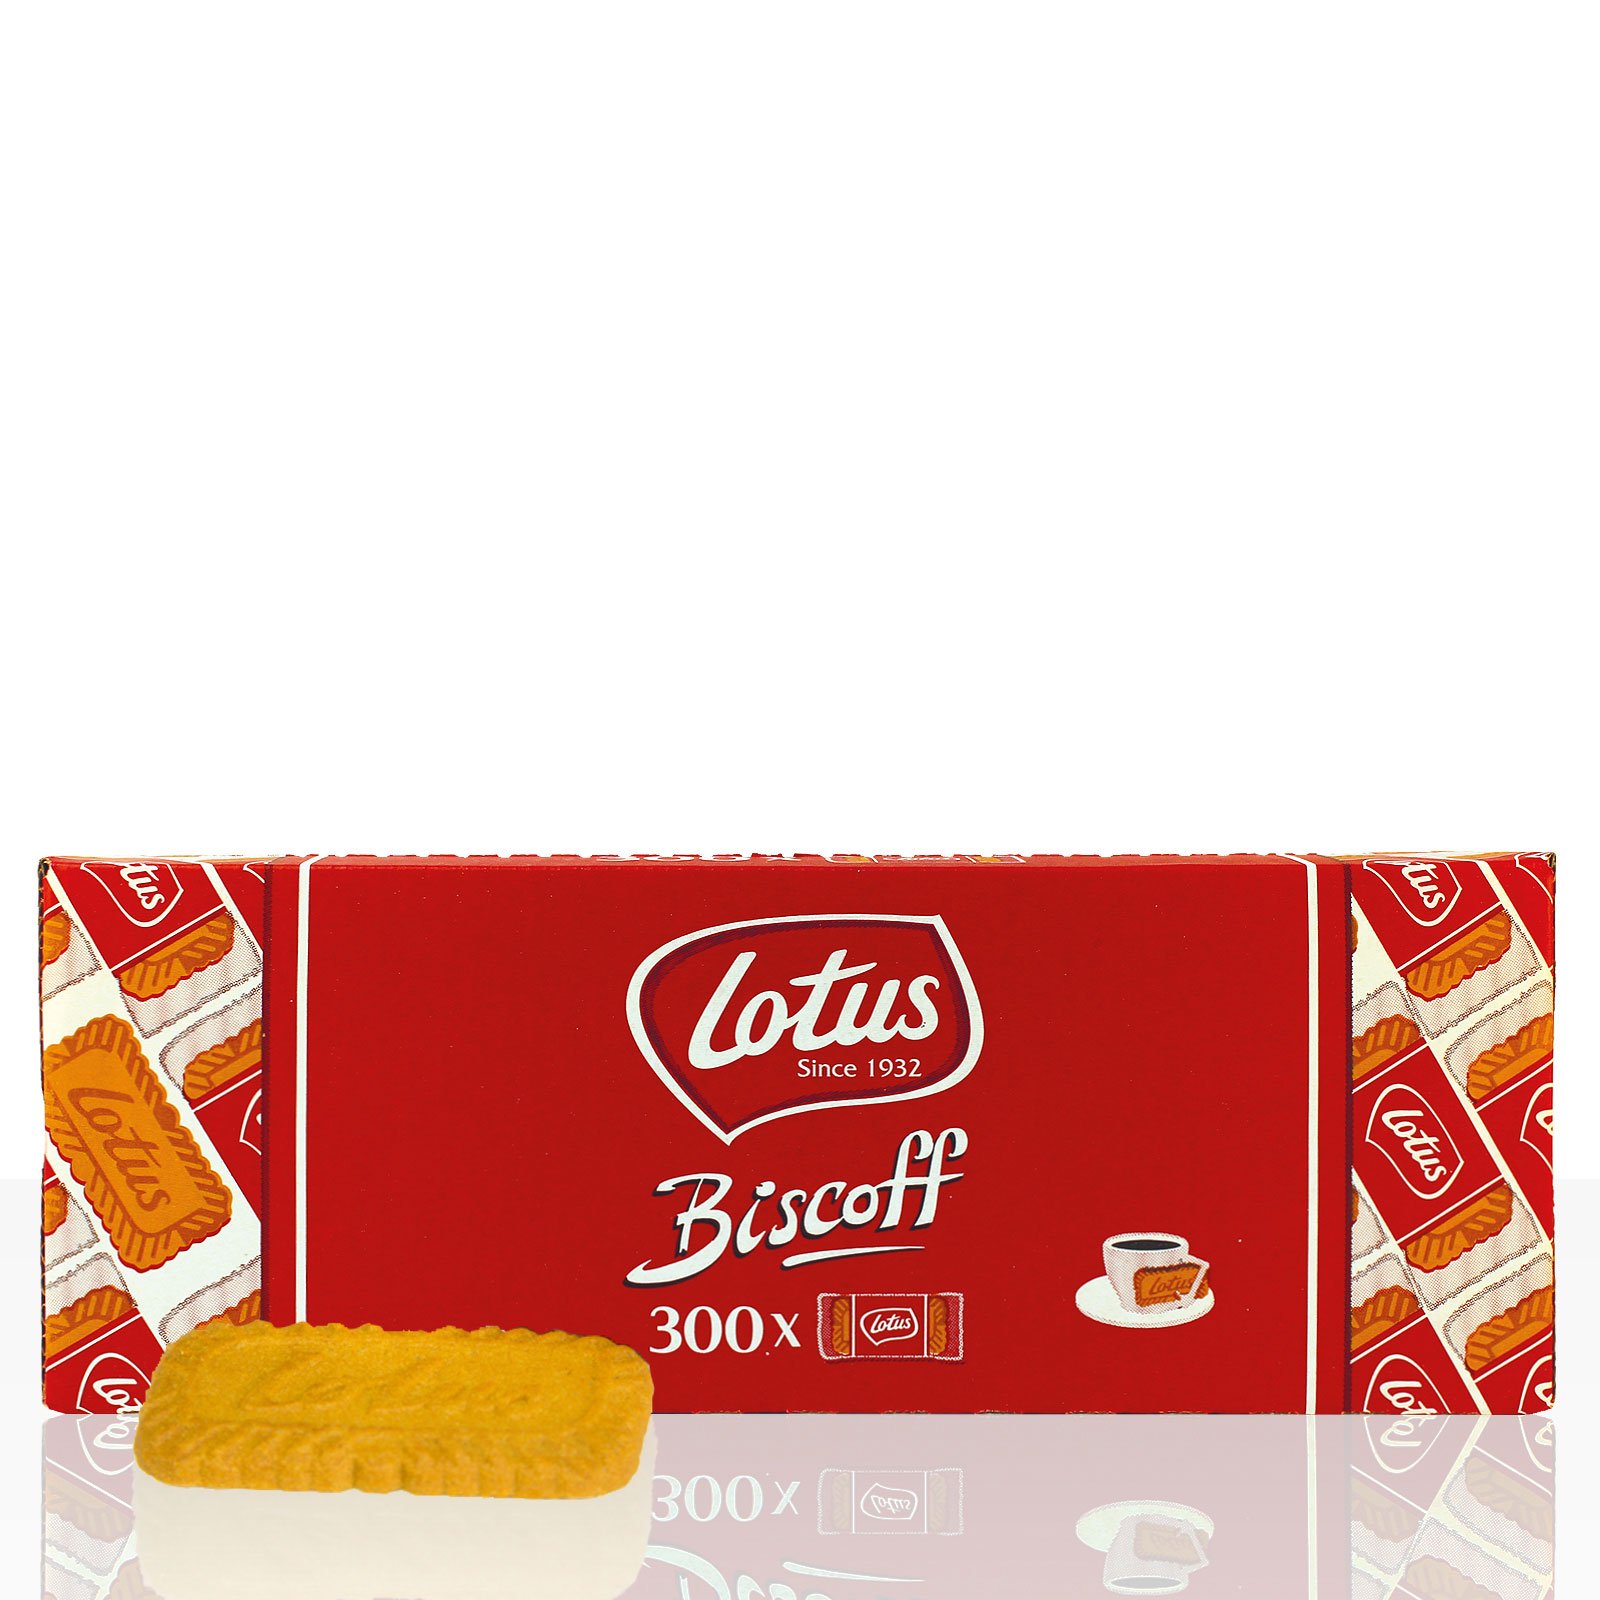 Lotus Biscoff Biscuits 1875g (300 pcs) Carton (Exp Date June 2022)